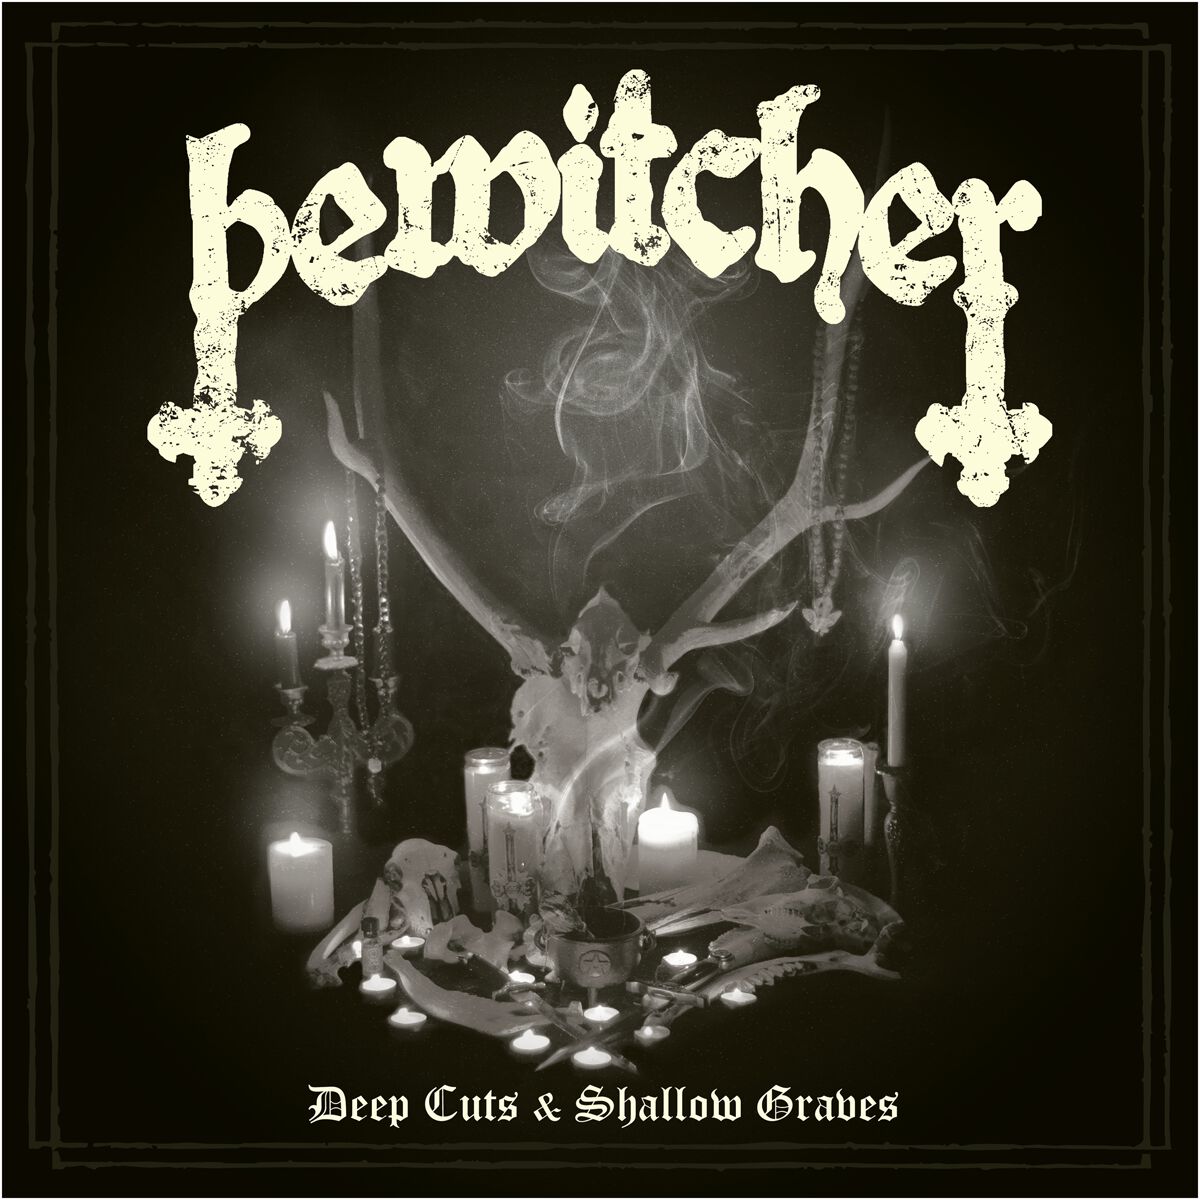 Deep cuts & shallow graves von Bewitcher - LP (Coloured, Limited Edition, Standard)